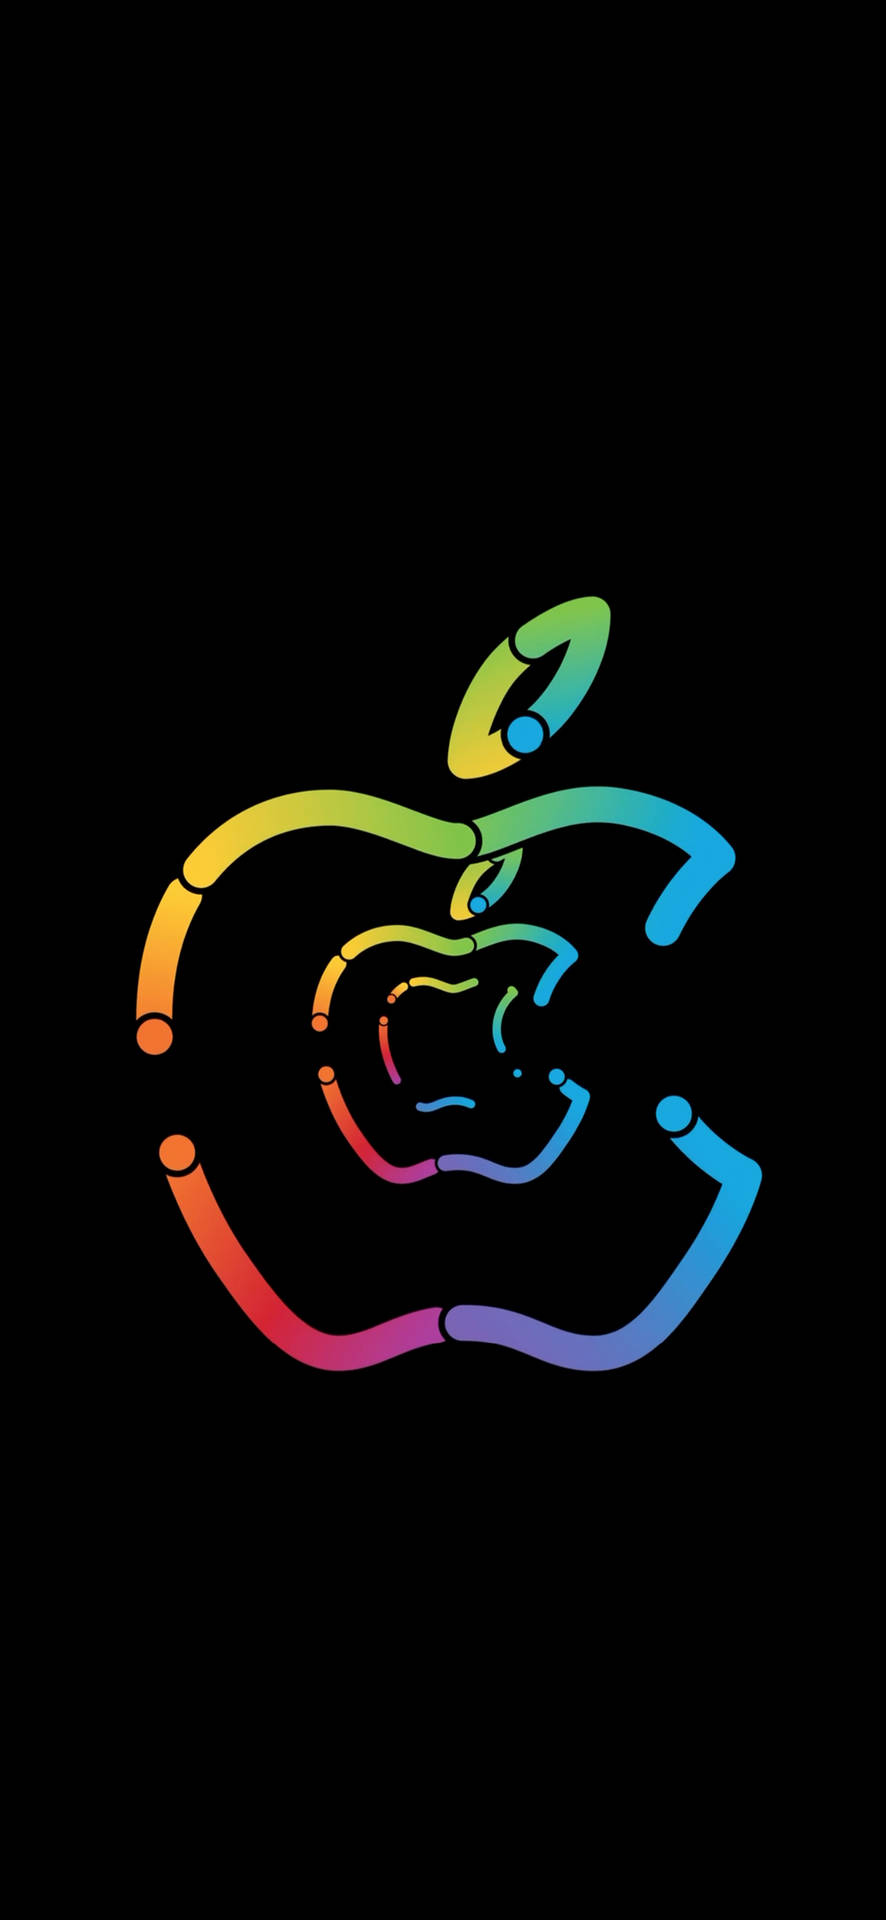 Colorful Apple Logo Artwork Wallpaper